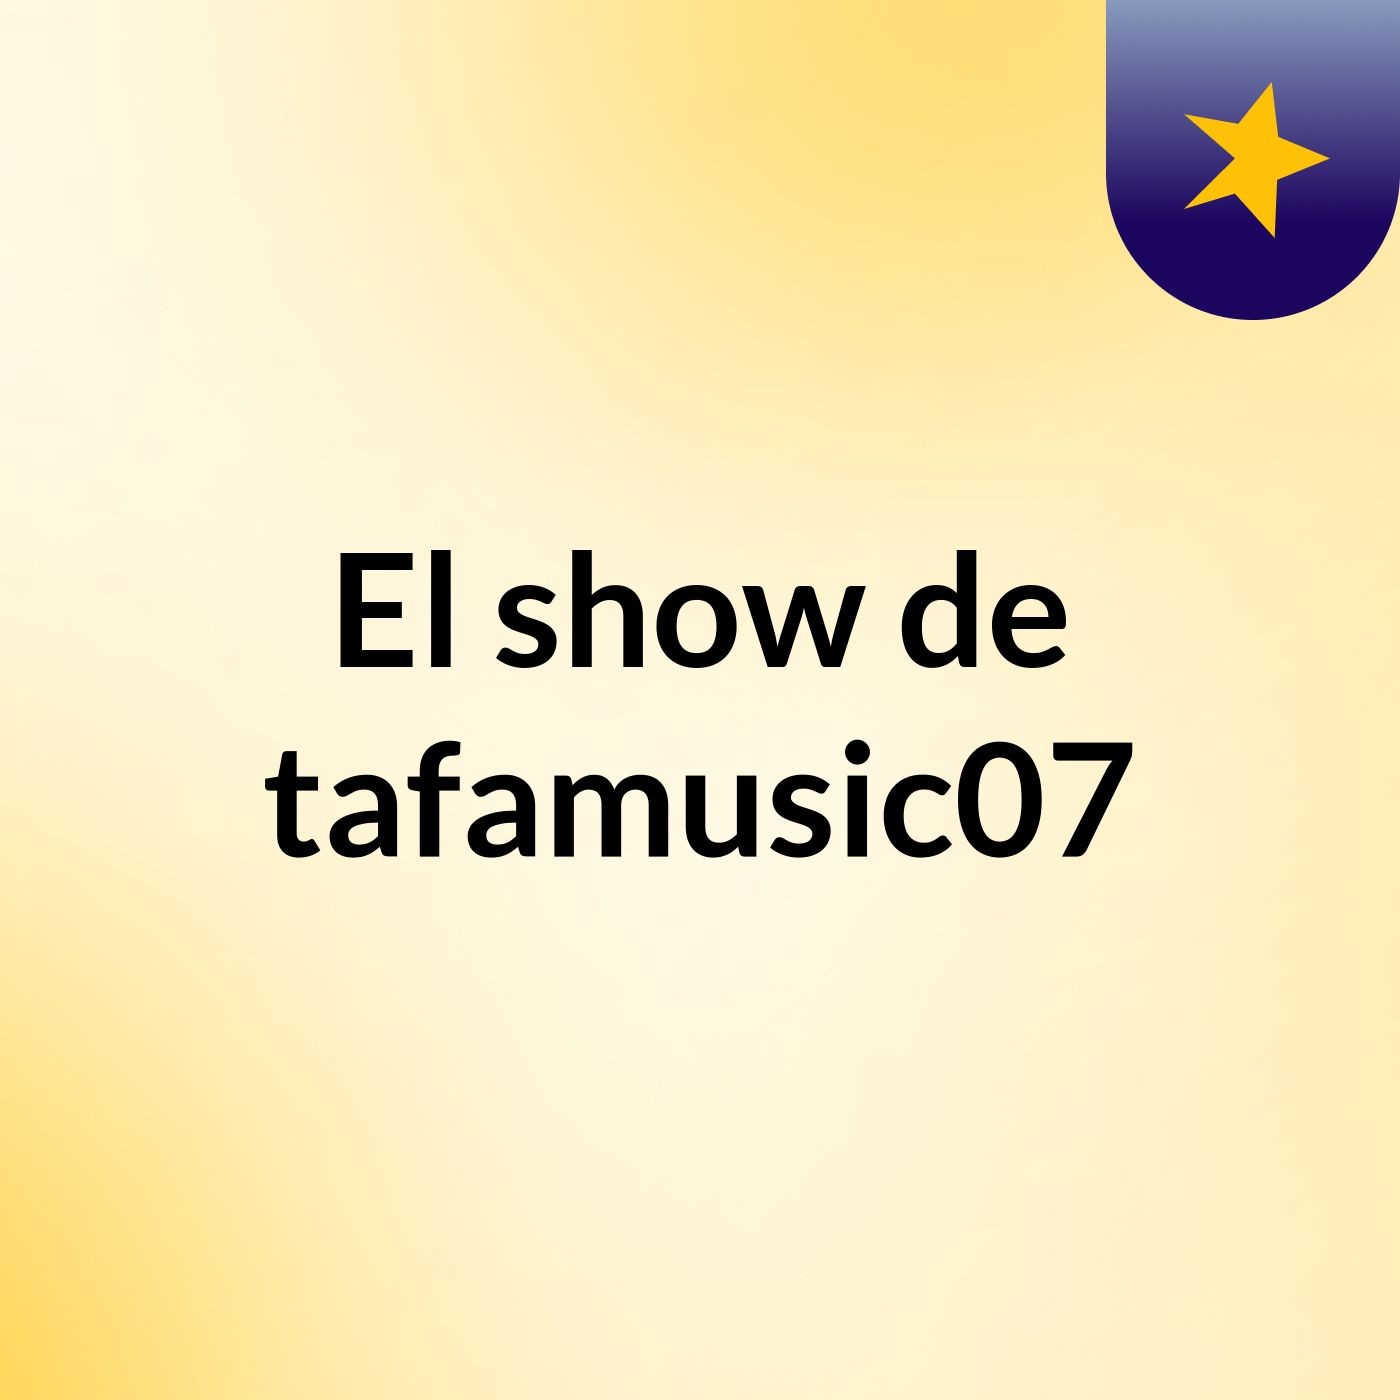 El show de tafamusic07